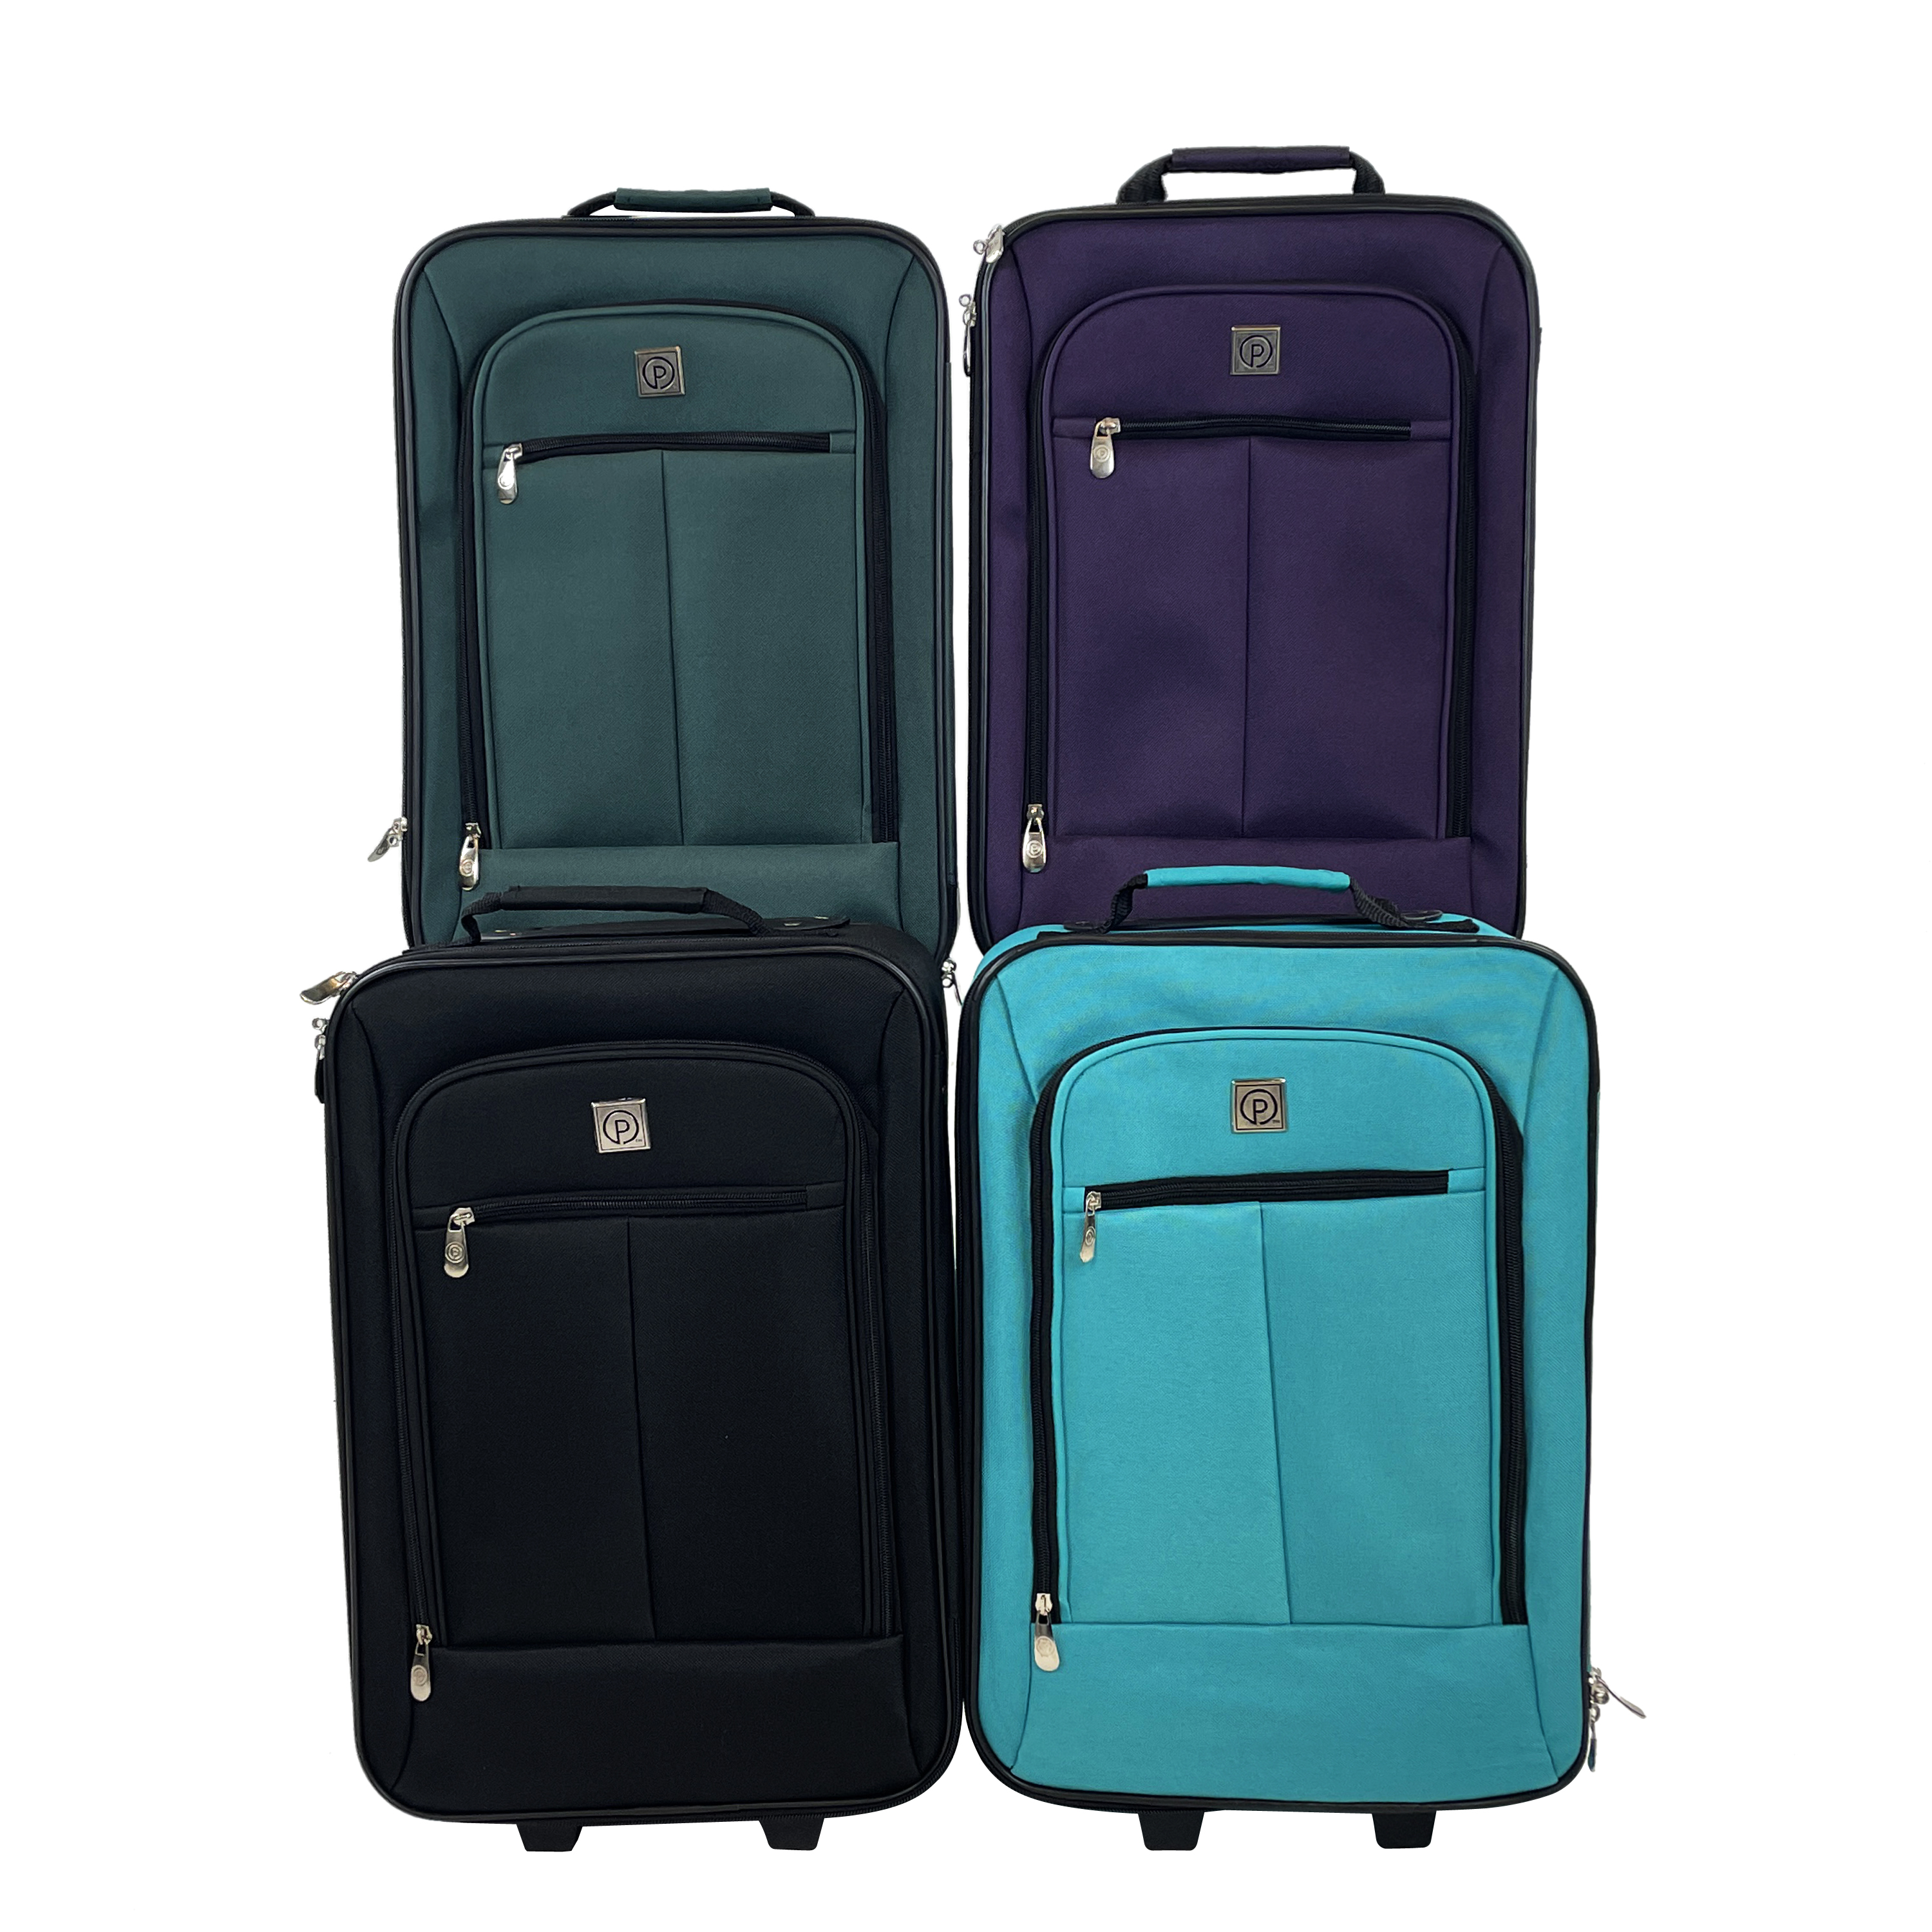 Protege Pilot Case 18" Carry-on Luggage, Purple, 12.5"L x 6.5"D x 19.25"H - image 3 of 7